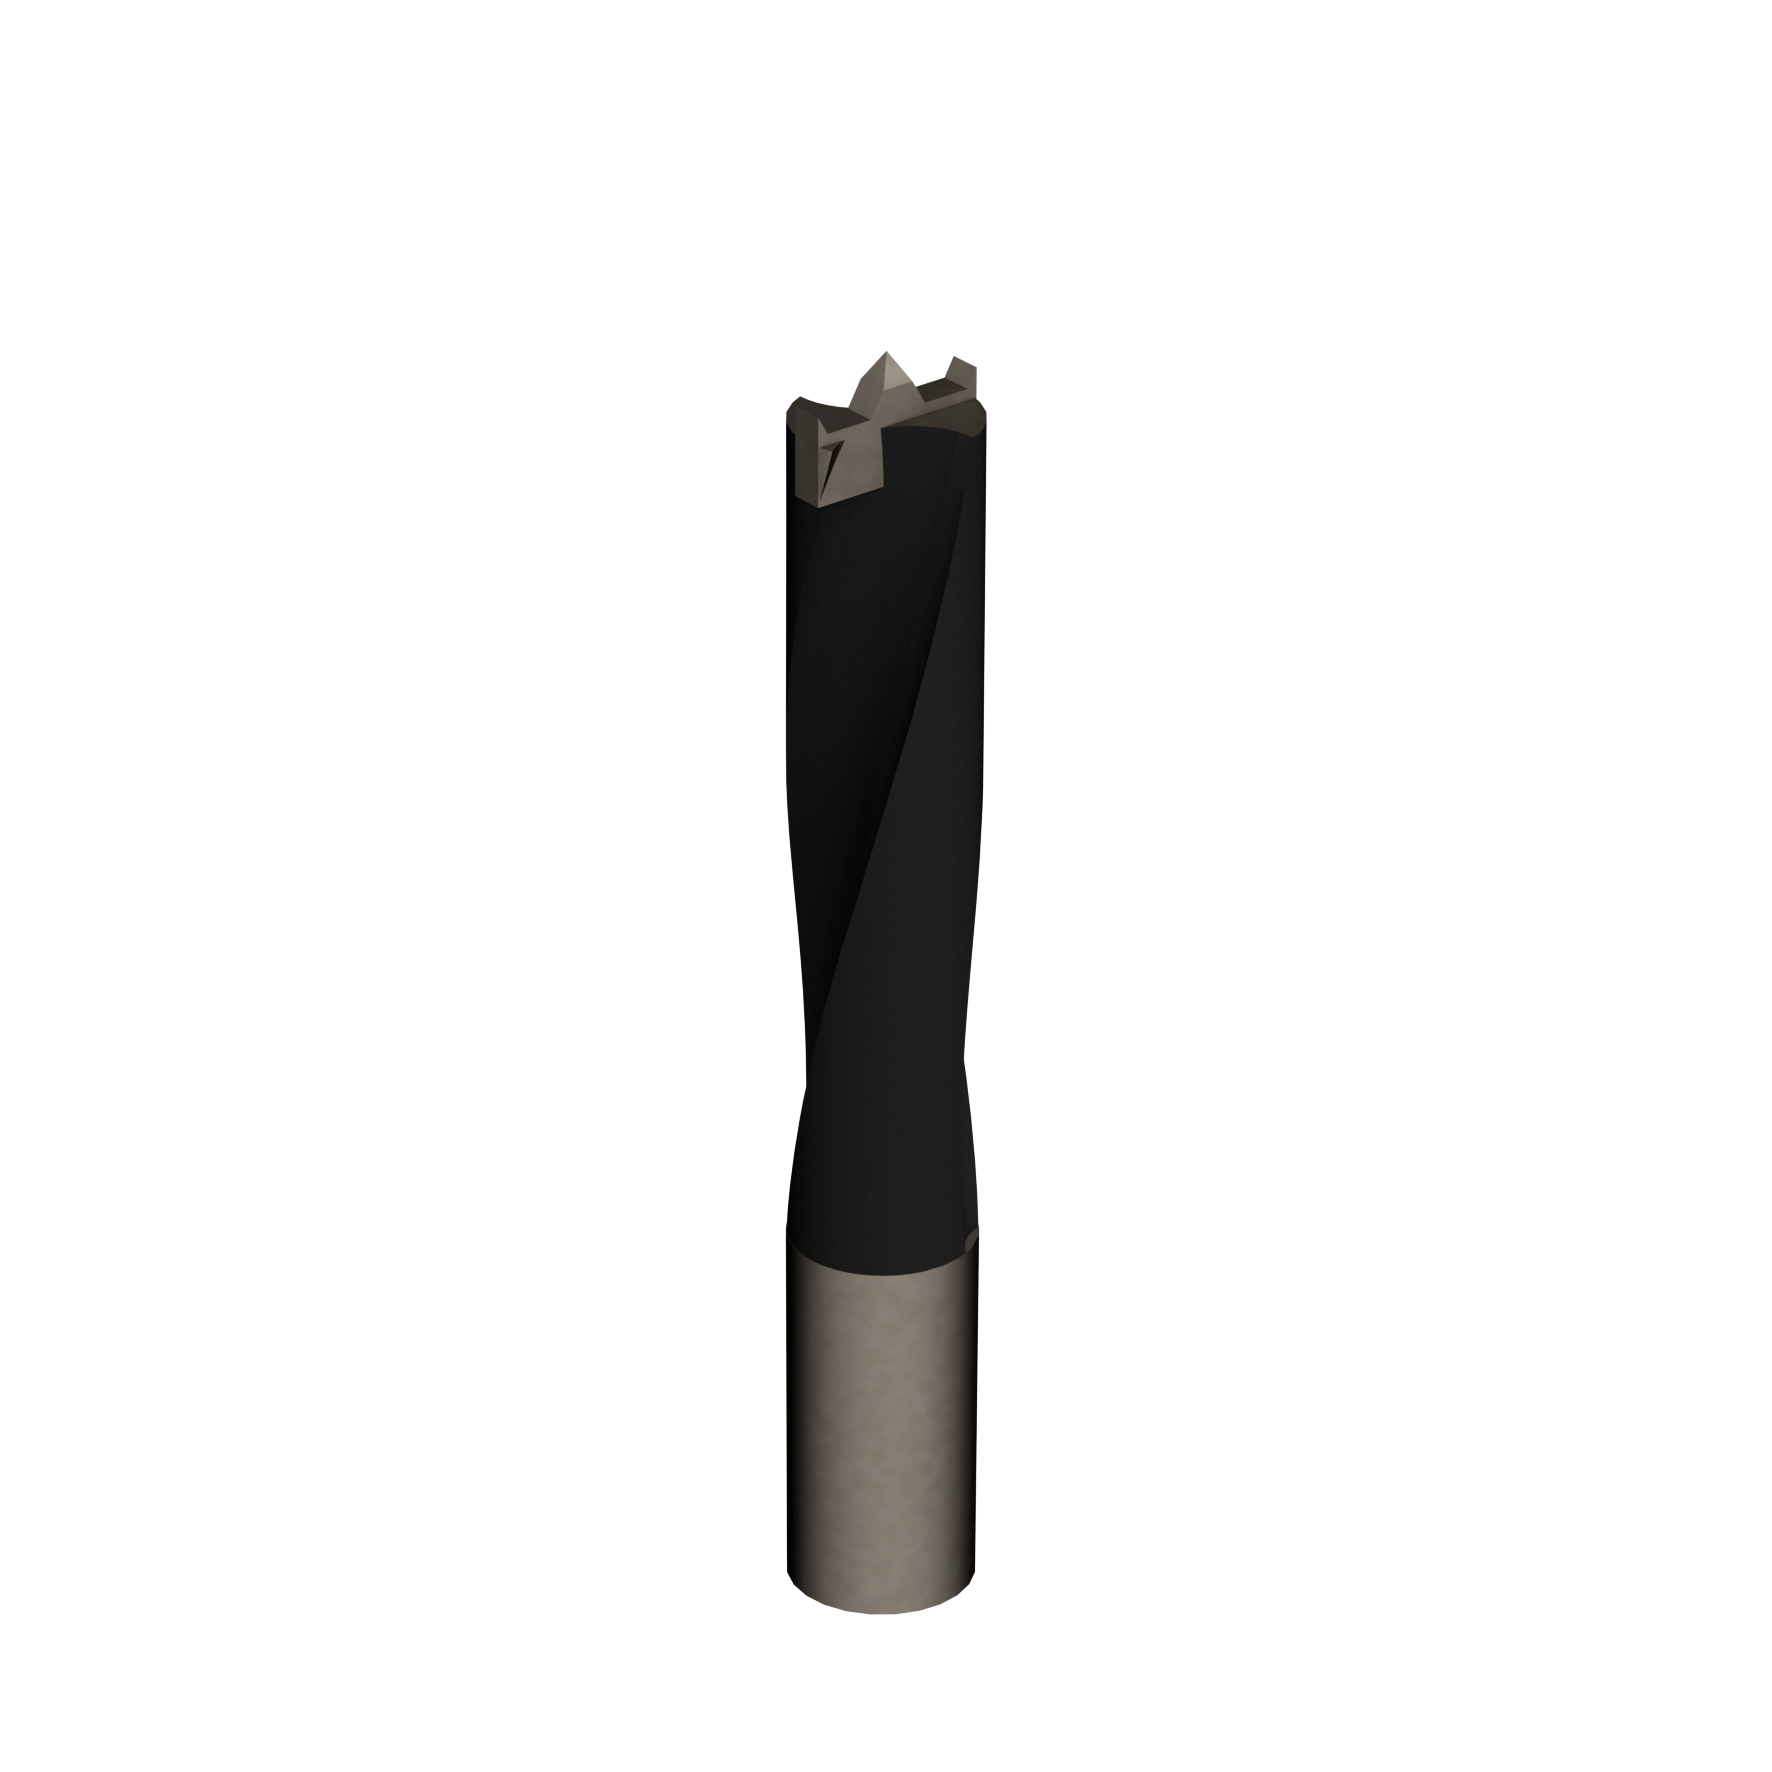 Fastmount 10mm Forstner Type Drill - Carbide Tipped